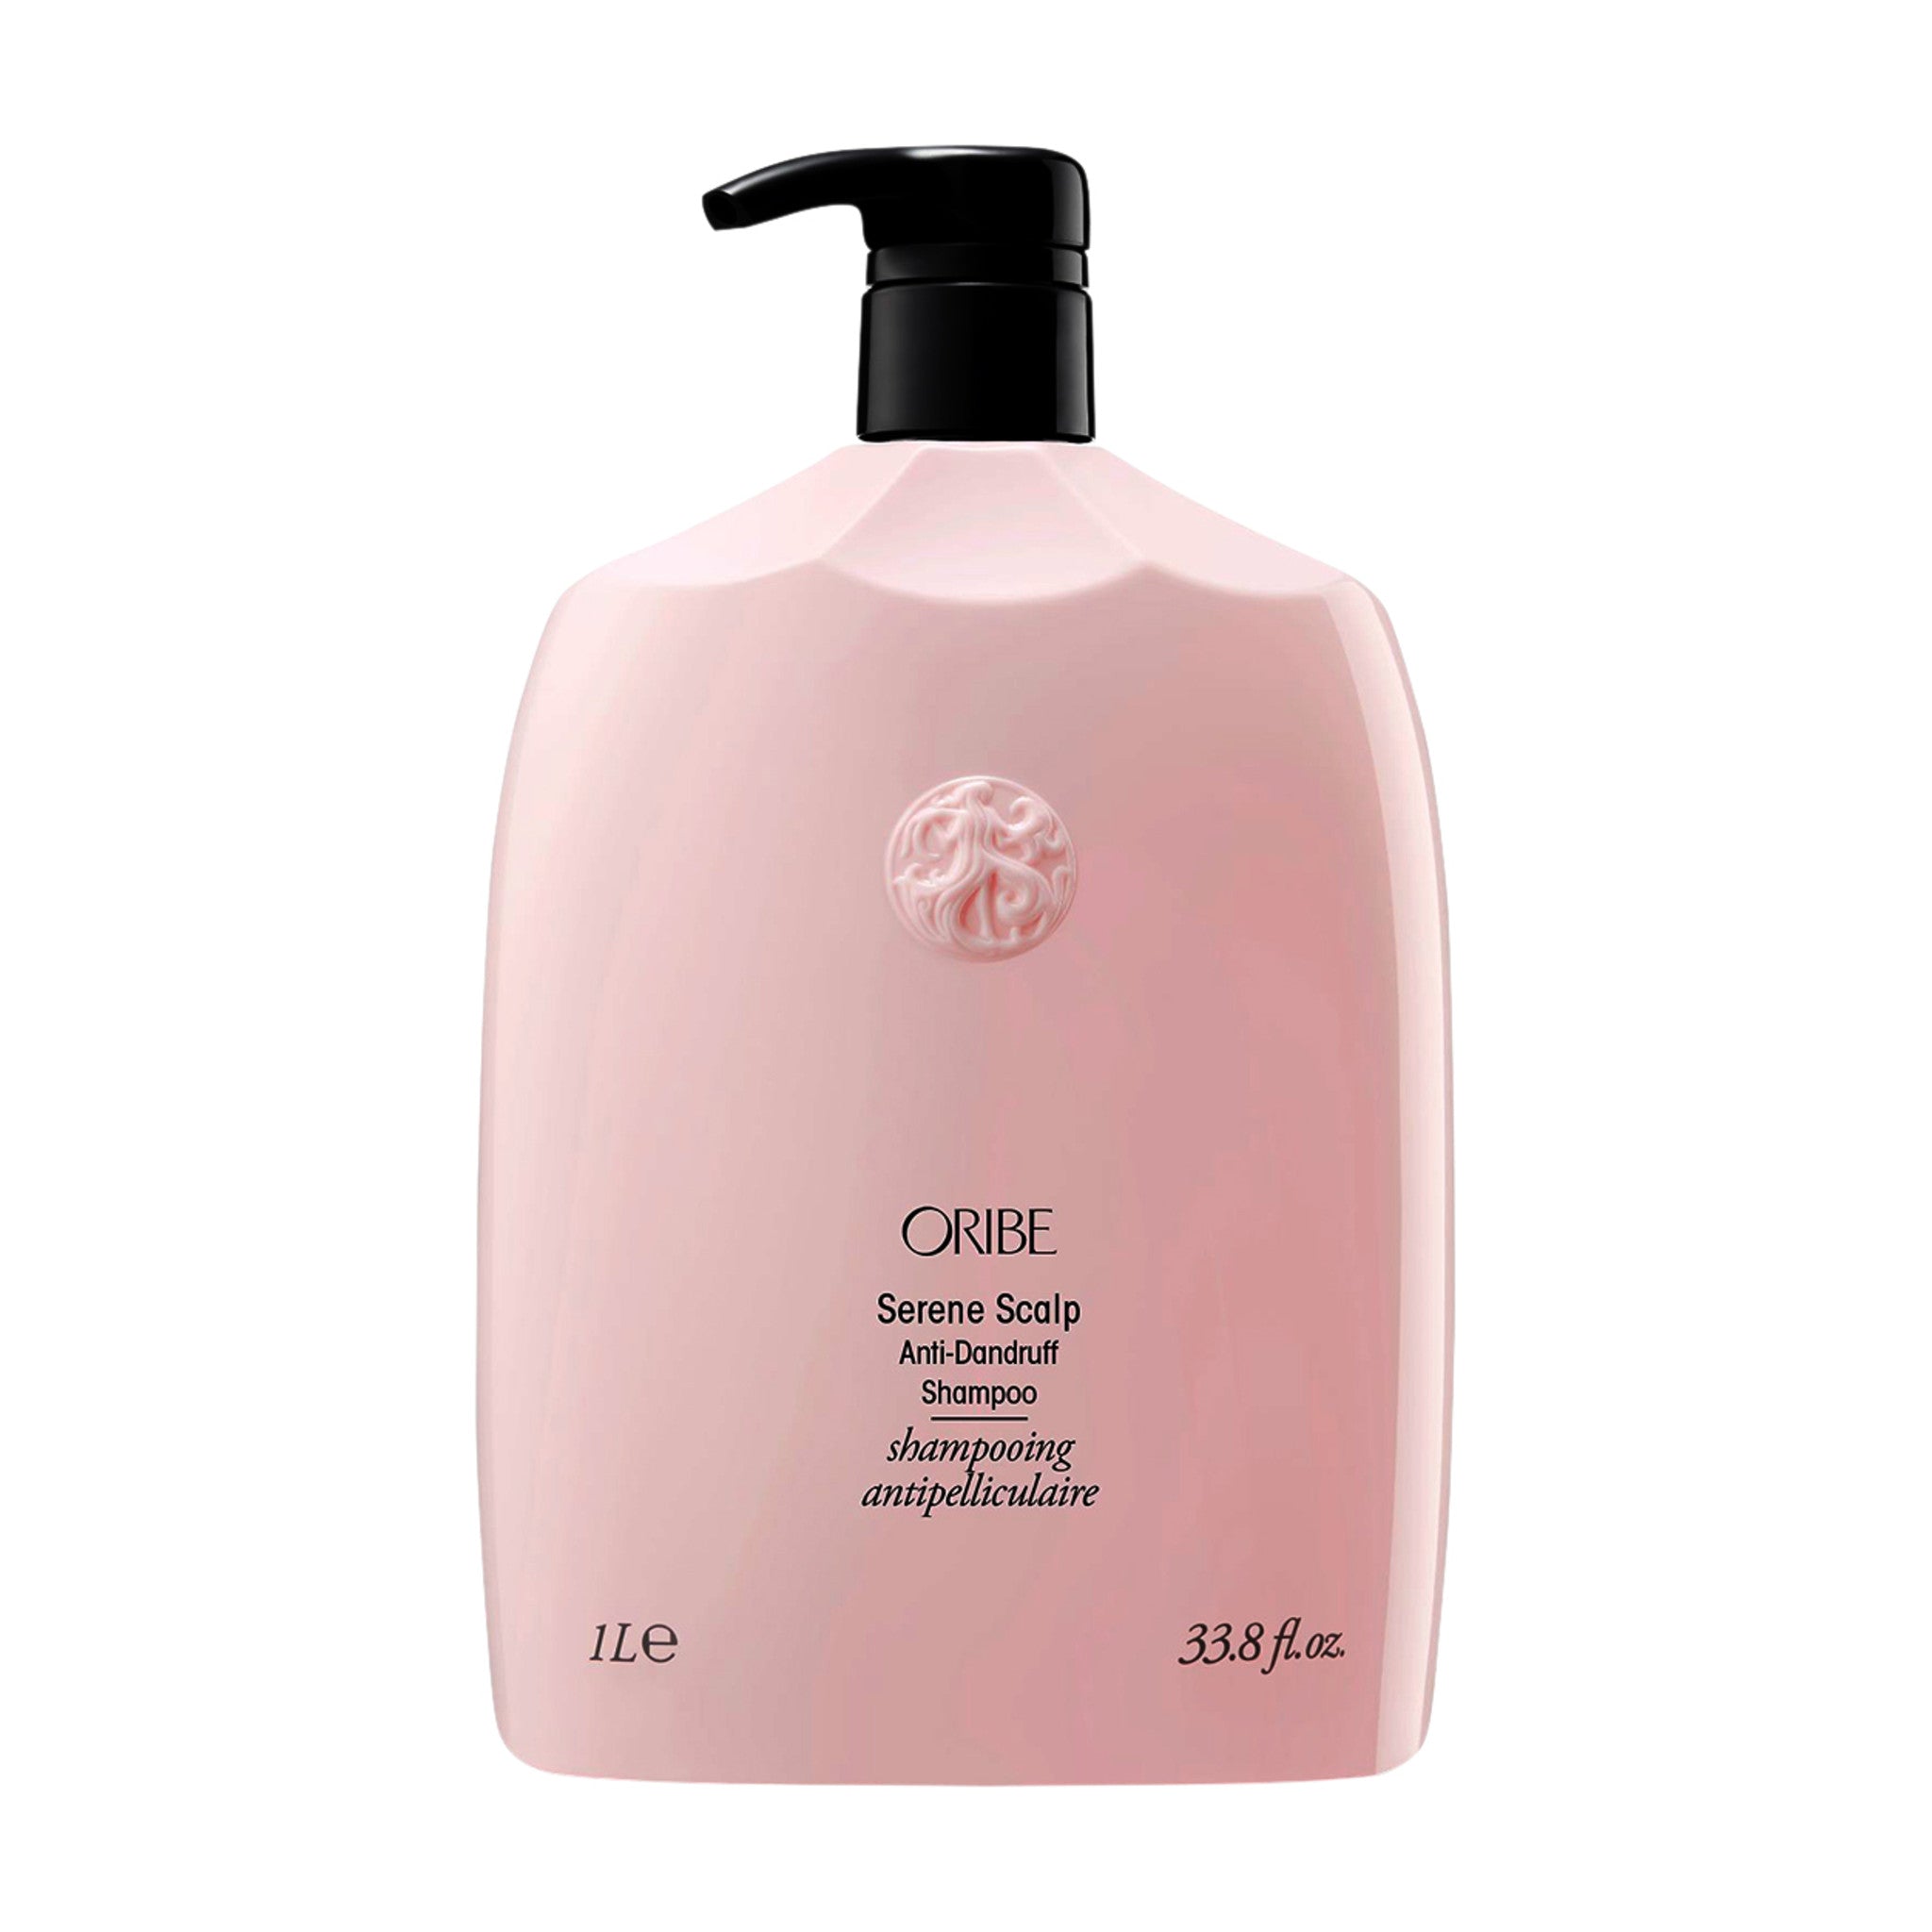 Oribe Serene Scalp Anti-Dandruff Shampoo Size variant: 33.8 fl oz | 1 L main image.